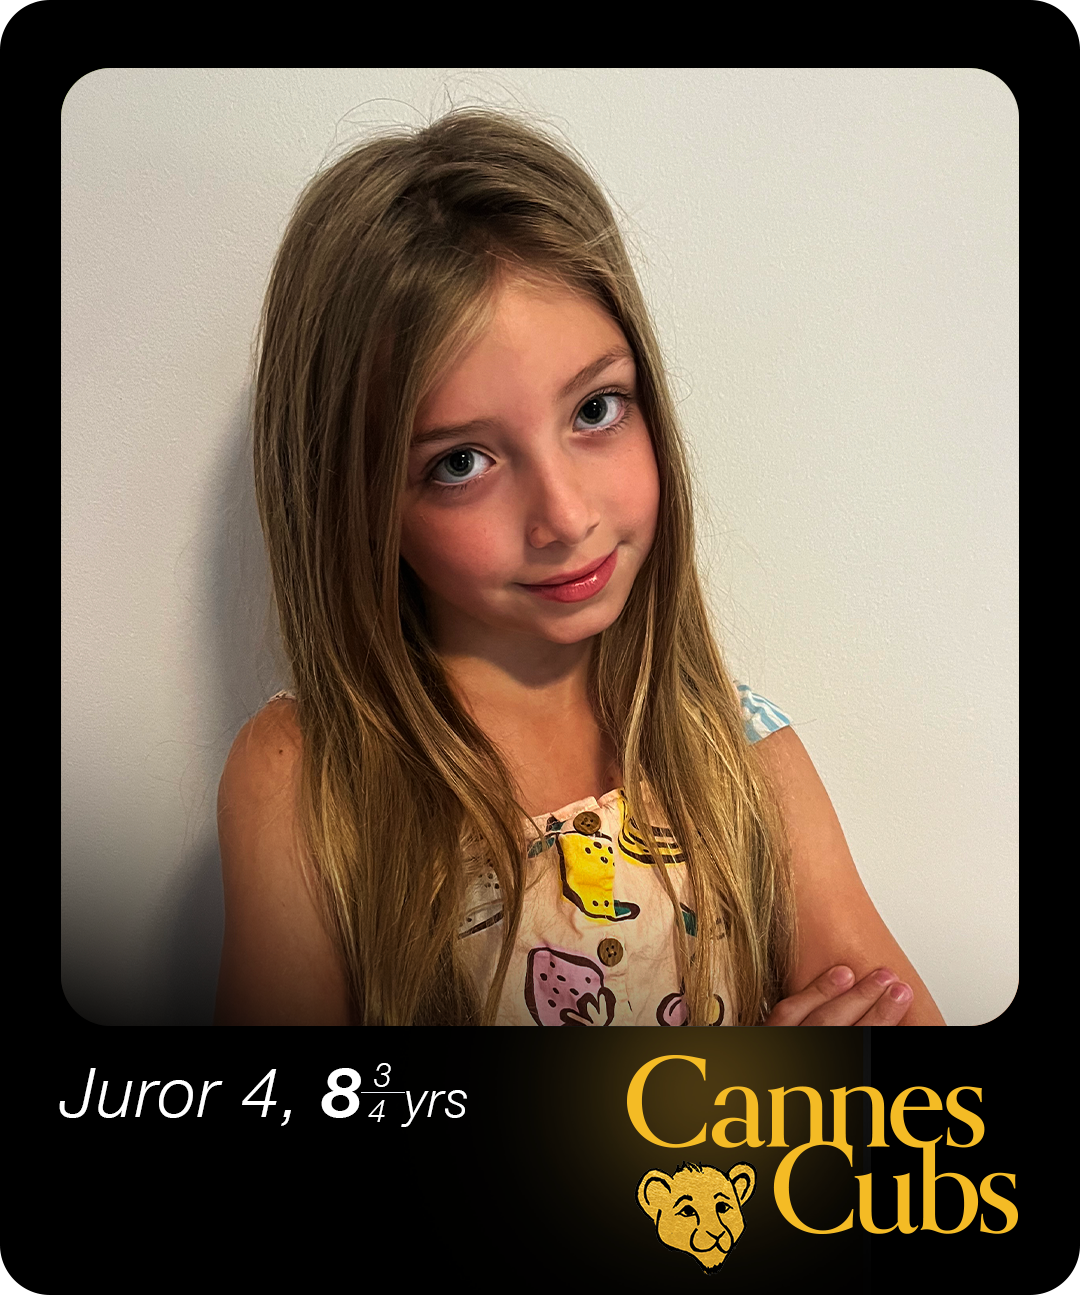 Cannes Cubs juror 4.png